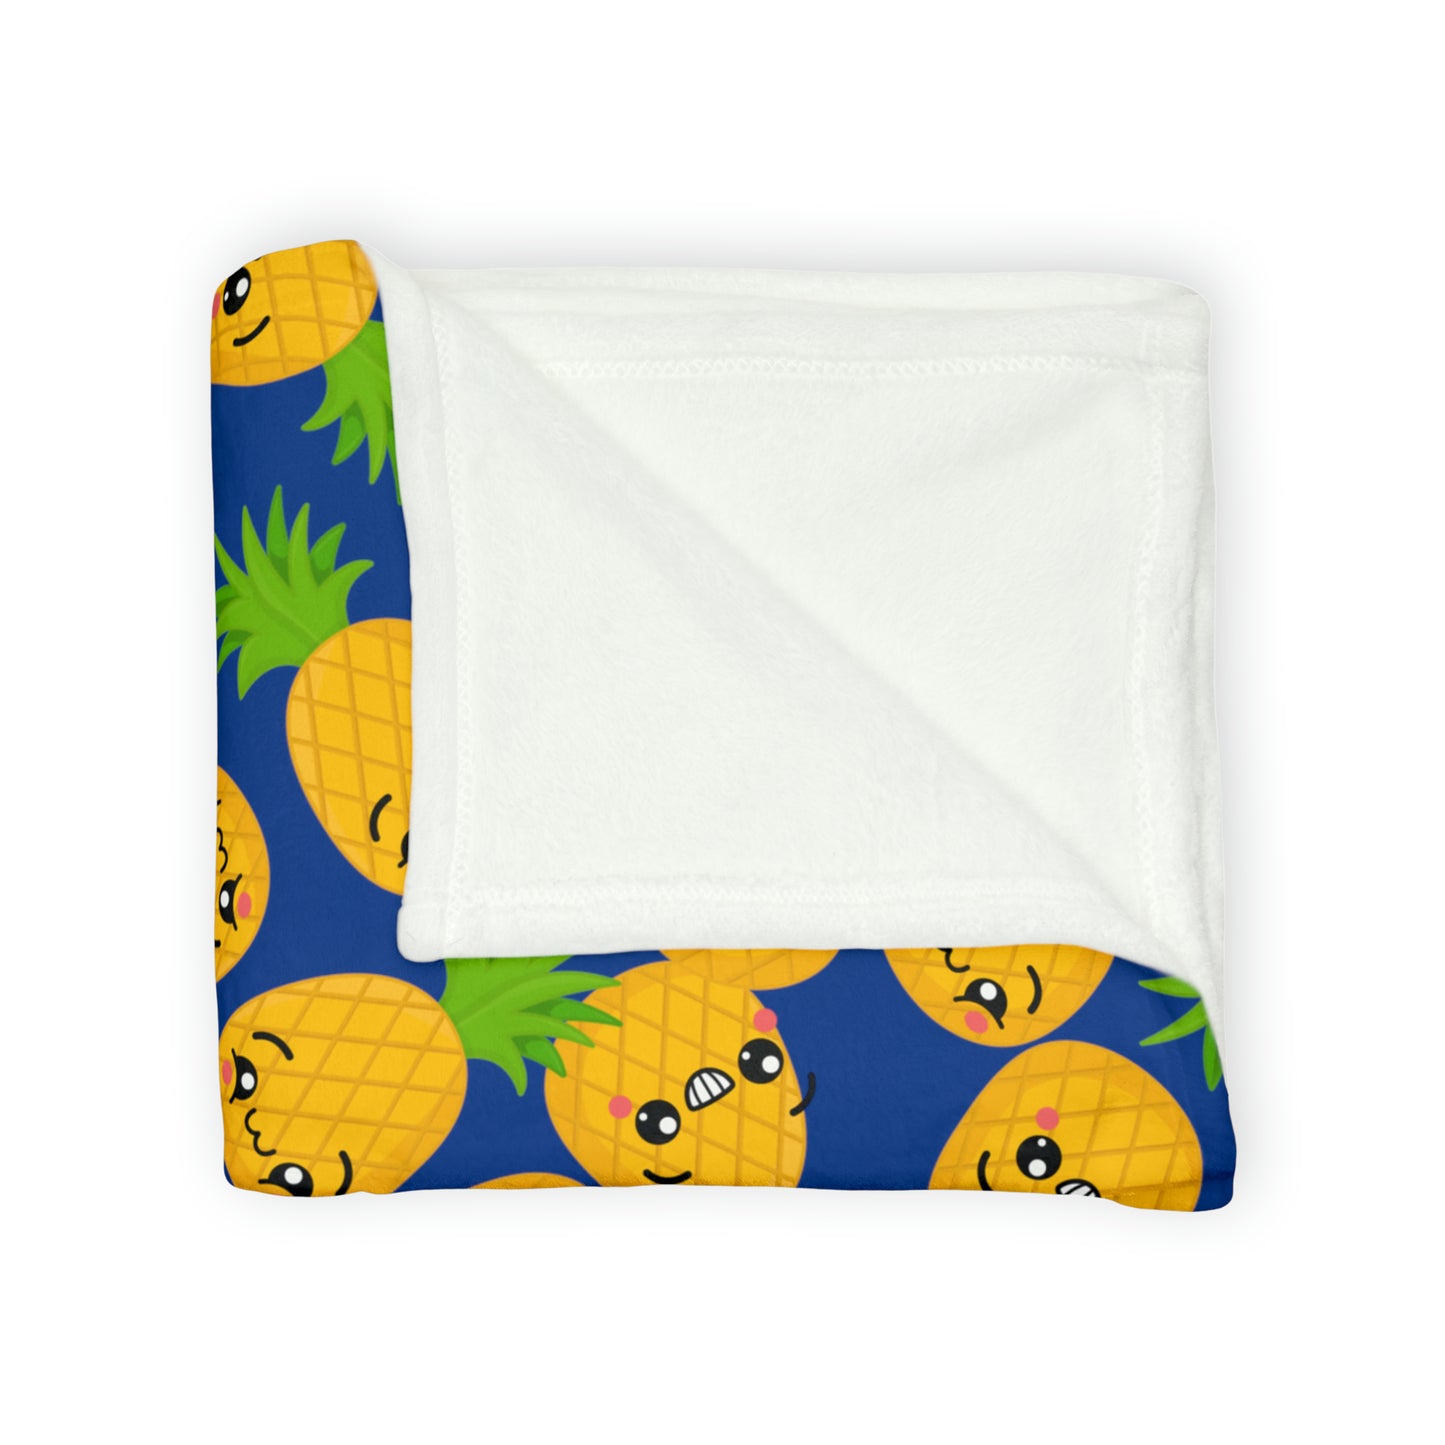 Cool Pineapples - Soft Polyester Blanket Blanket Food